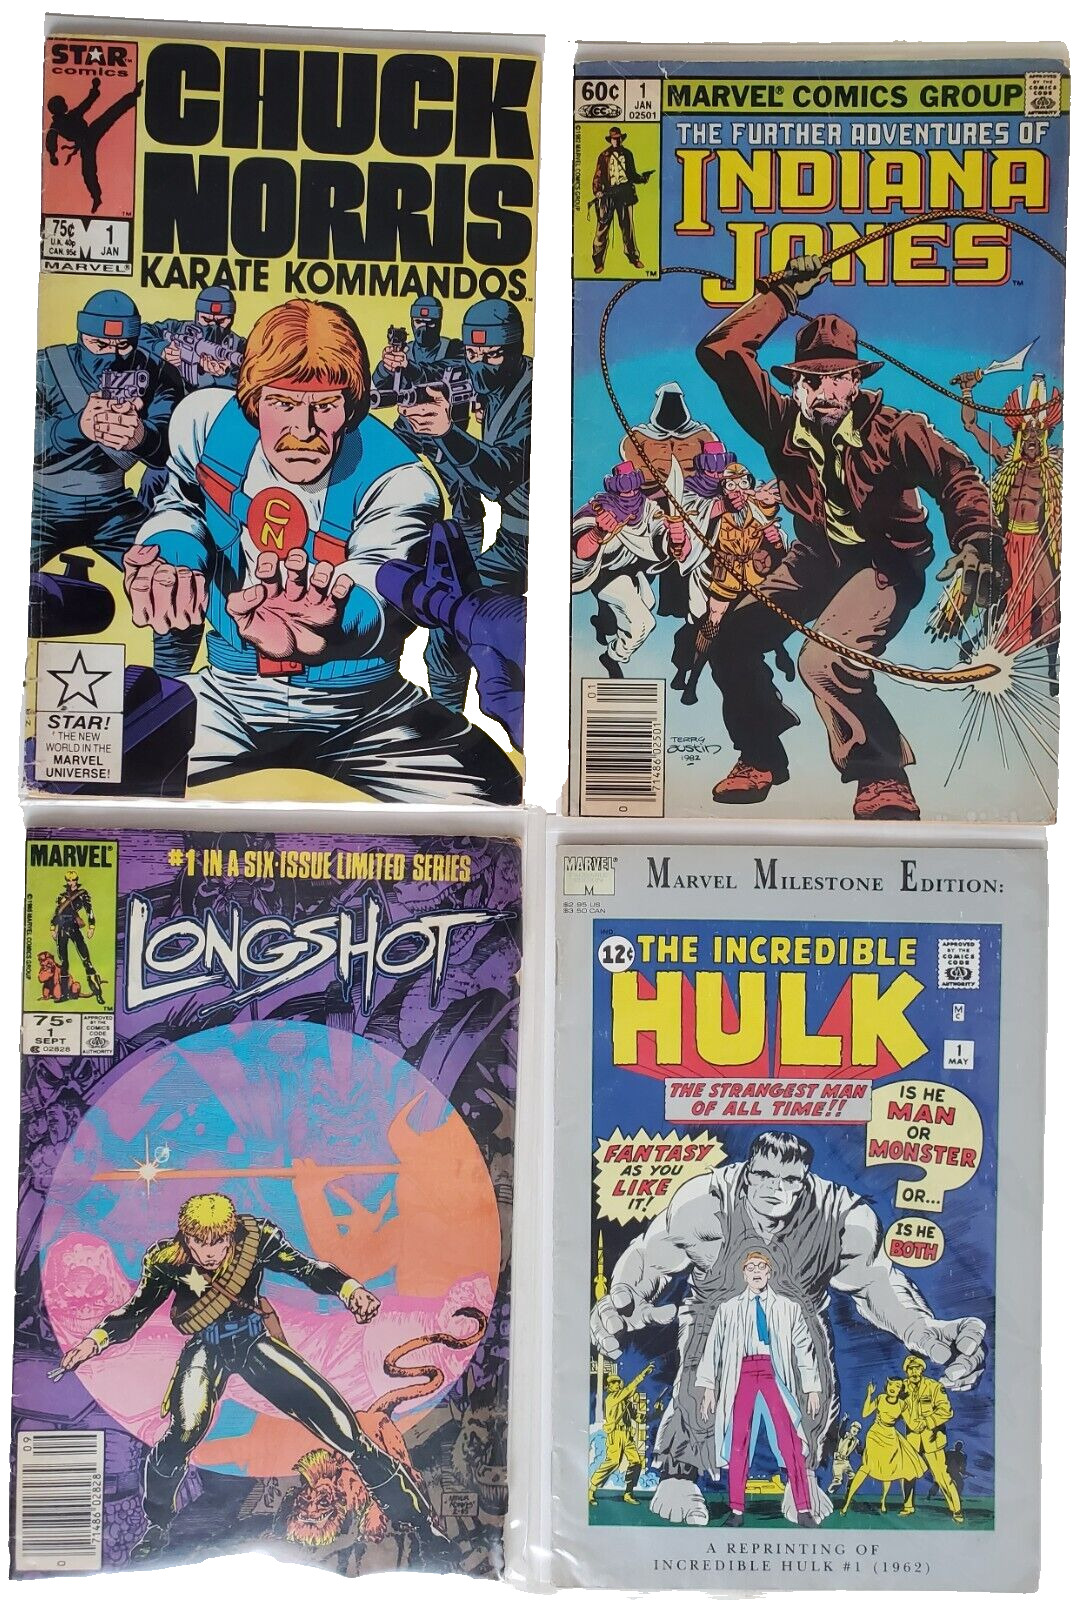 Marvel #1 Lot, Chuck Norris, Indiana Jones, Longshot, MME: The Hulk, (w/defects)